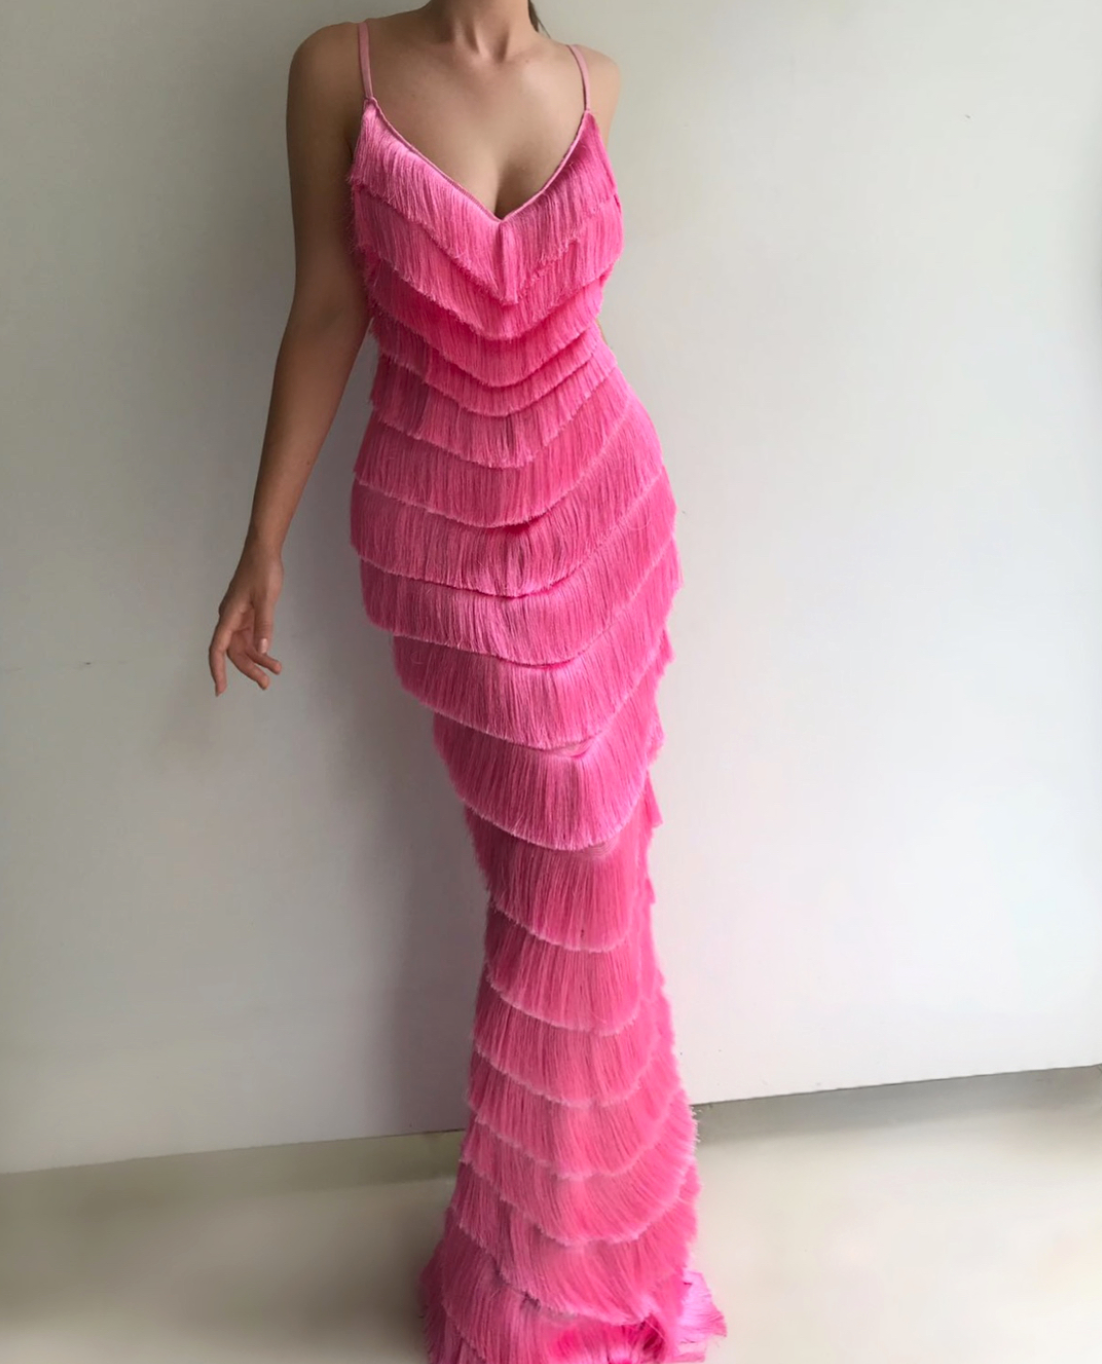 Pink fringe mermaid dress with spaghetti straps